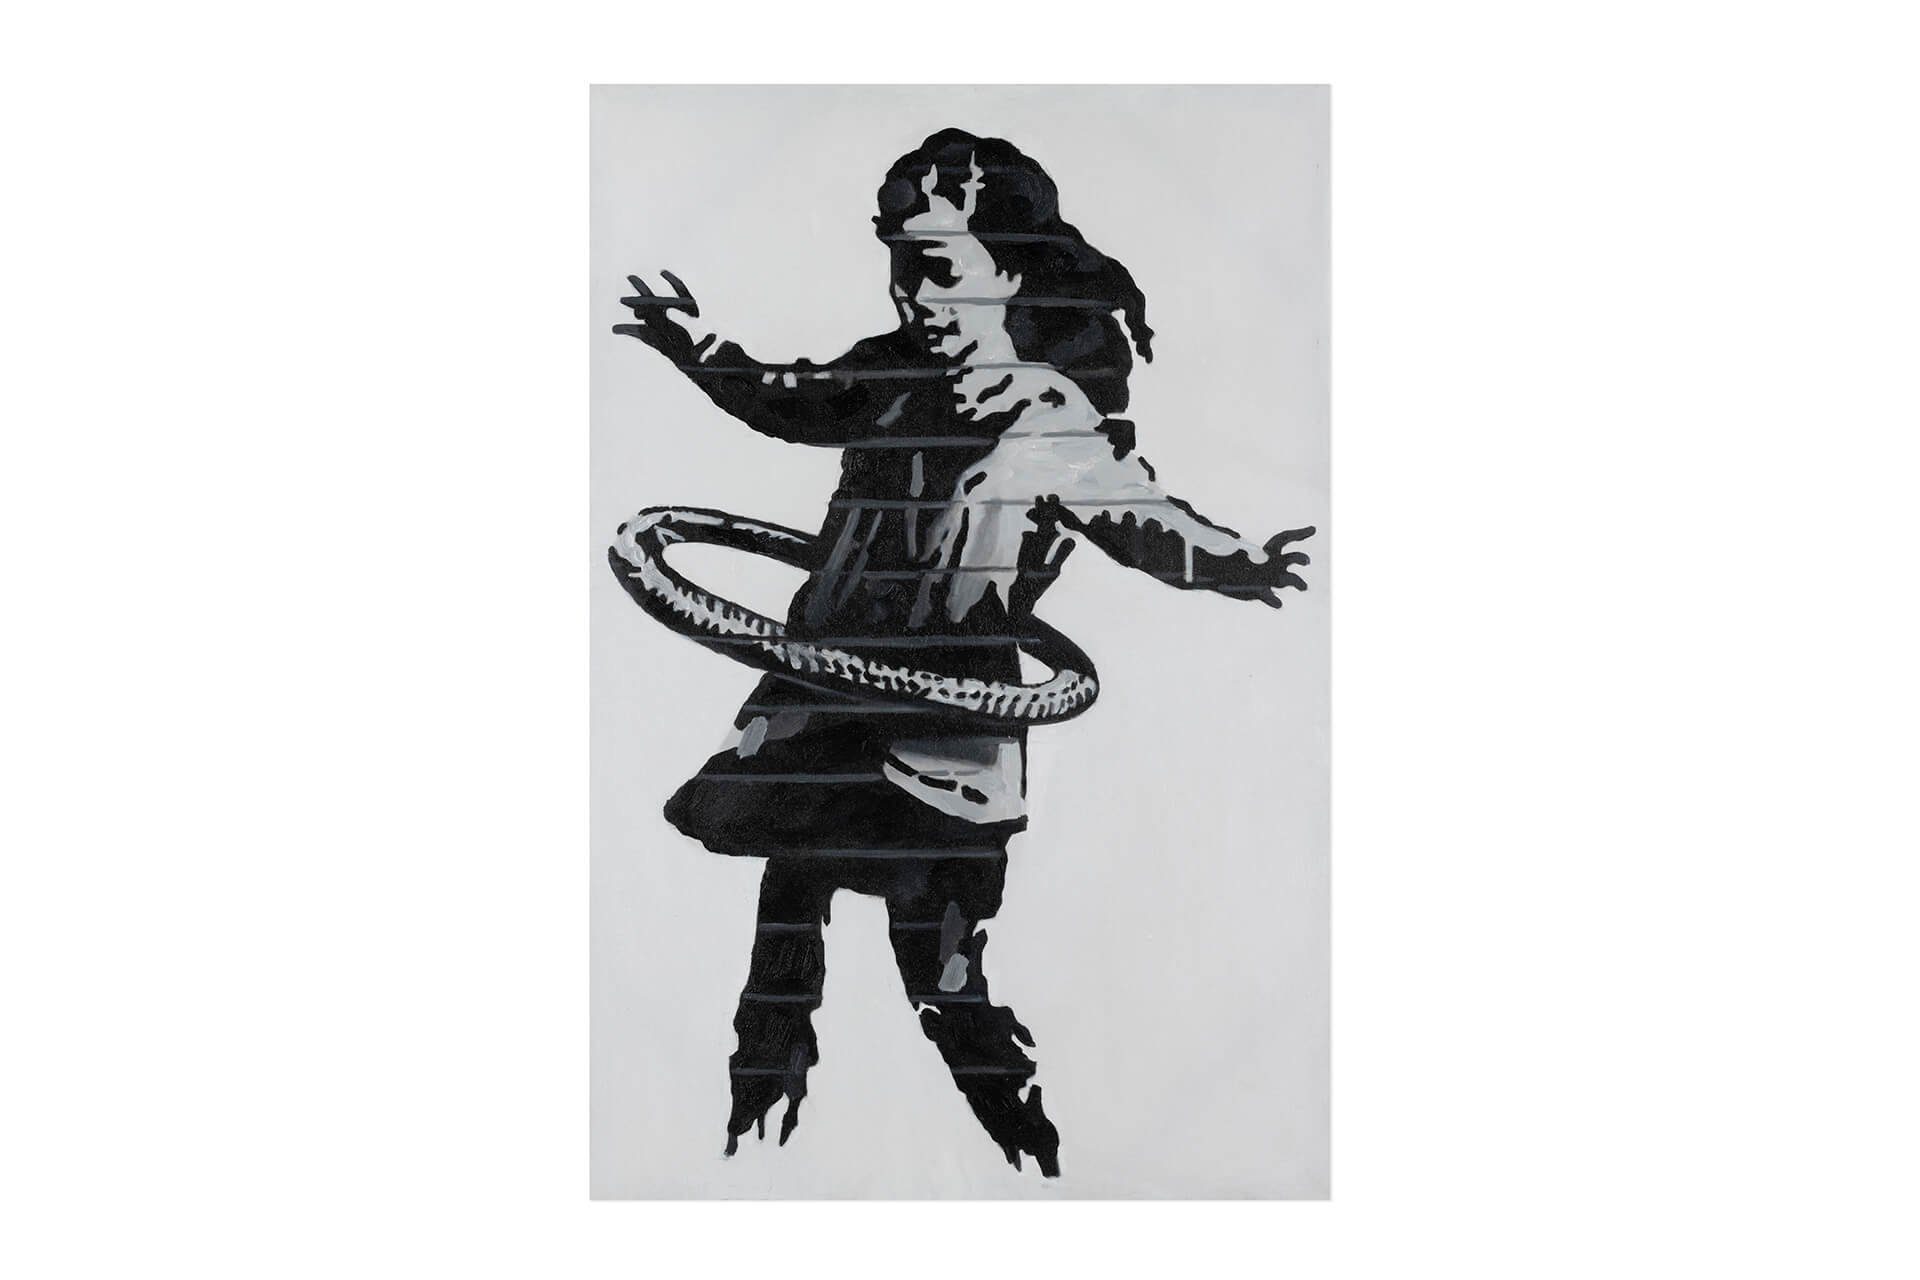 Hula Wohnzimmer KUNSTLOFT 60x90 Banksy's HANDGEMALT cm, 100% Wandbild Gemälde Leinwandbild Hoop